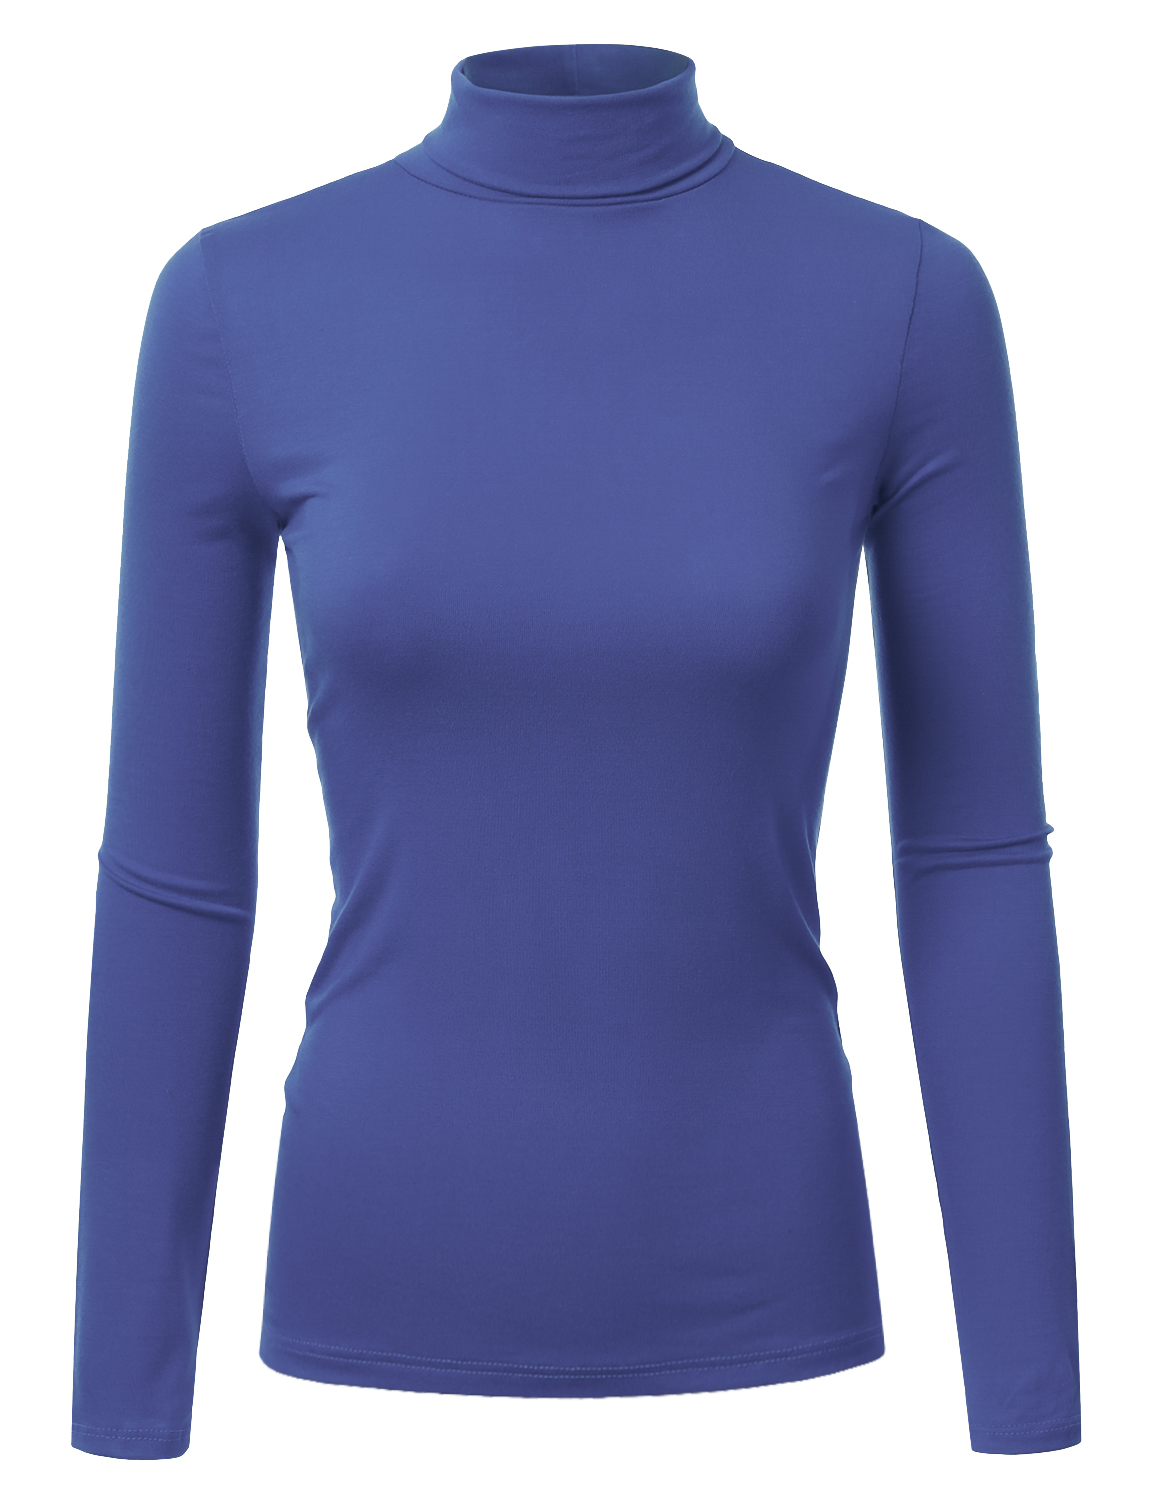 Doublju Womens Long Sleeve Turtleneck Lightweight Pullover Top Sweater ...